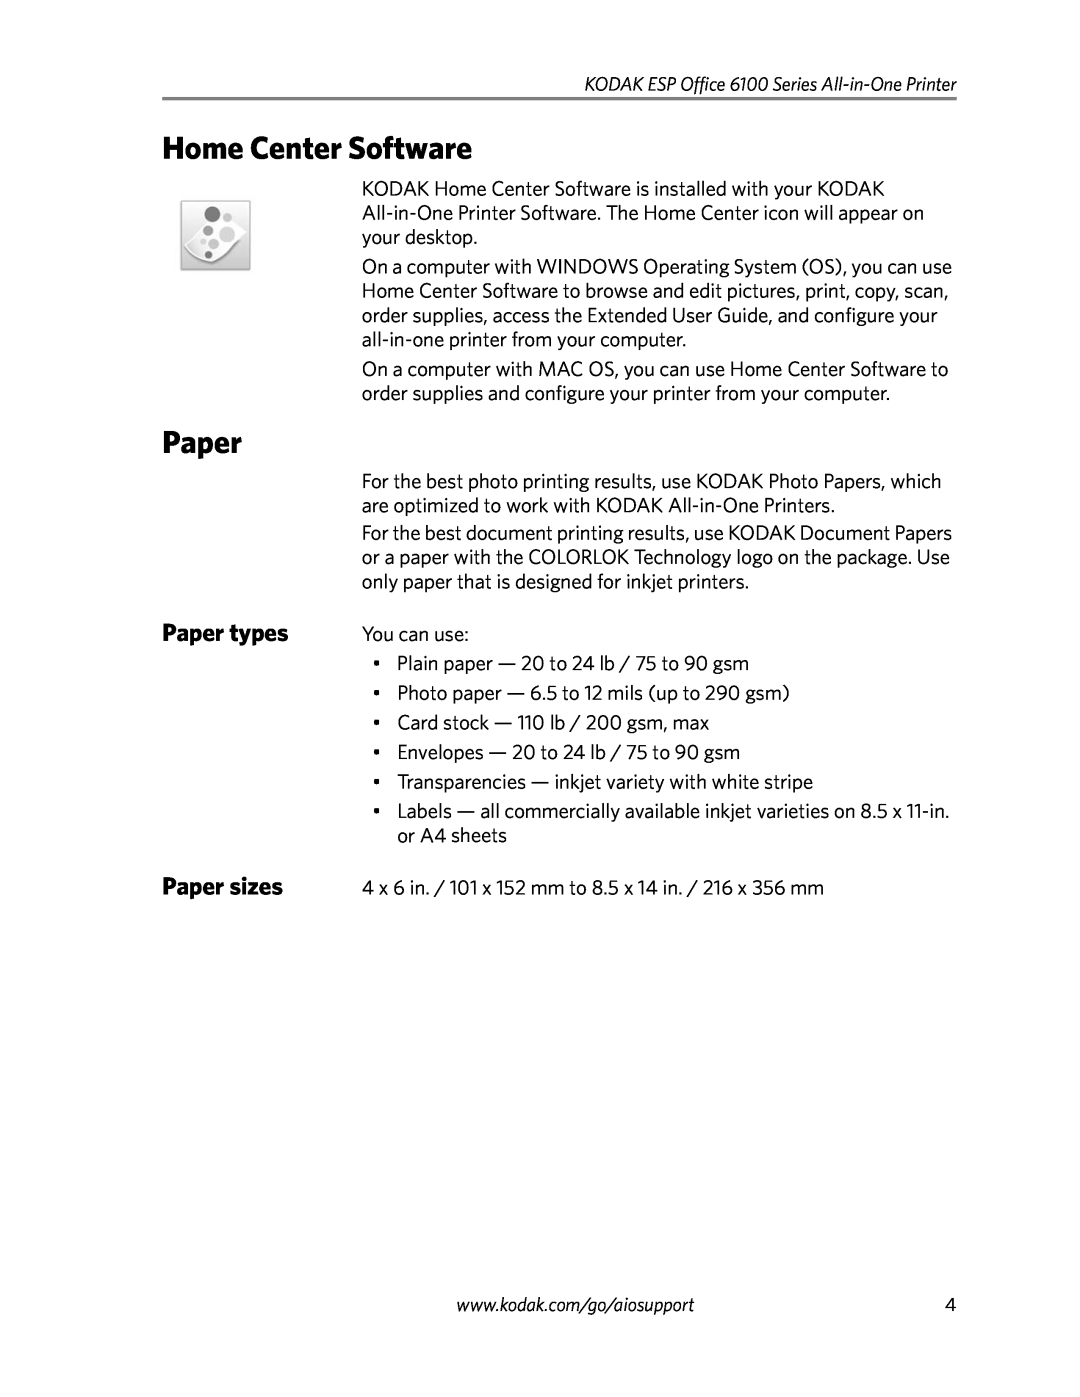 Kodak 6100 Series manual Home Center Software, Paper types Paper sizes 